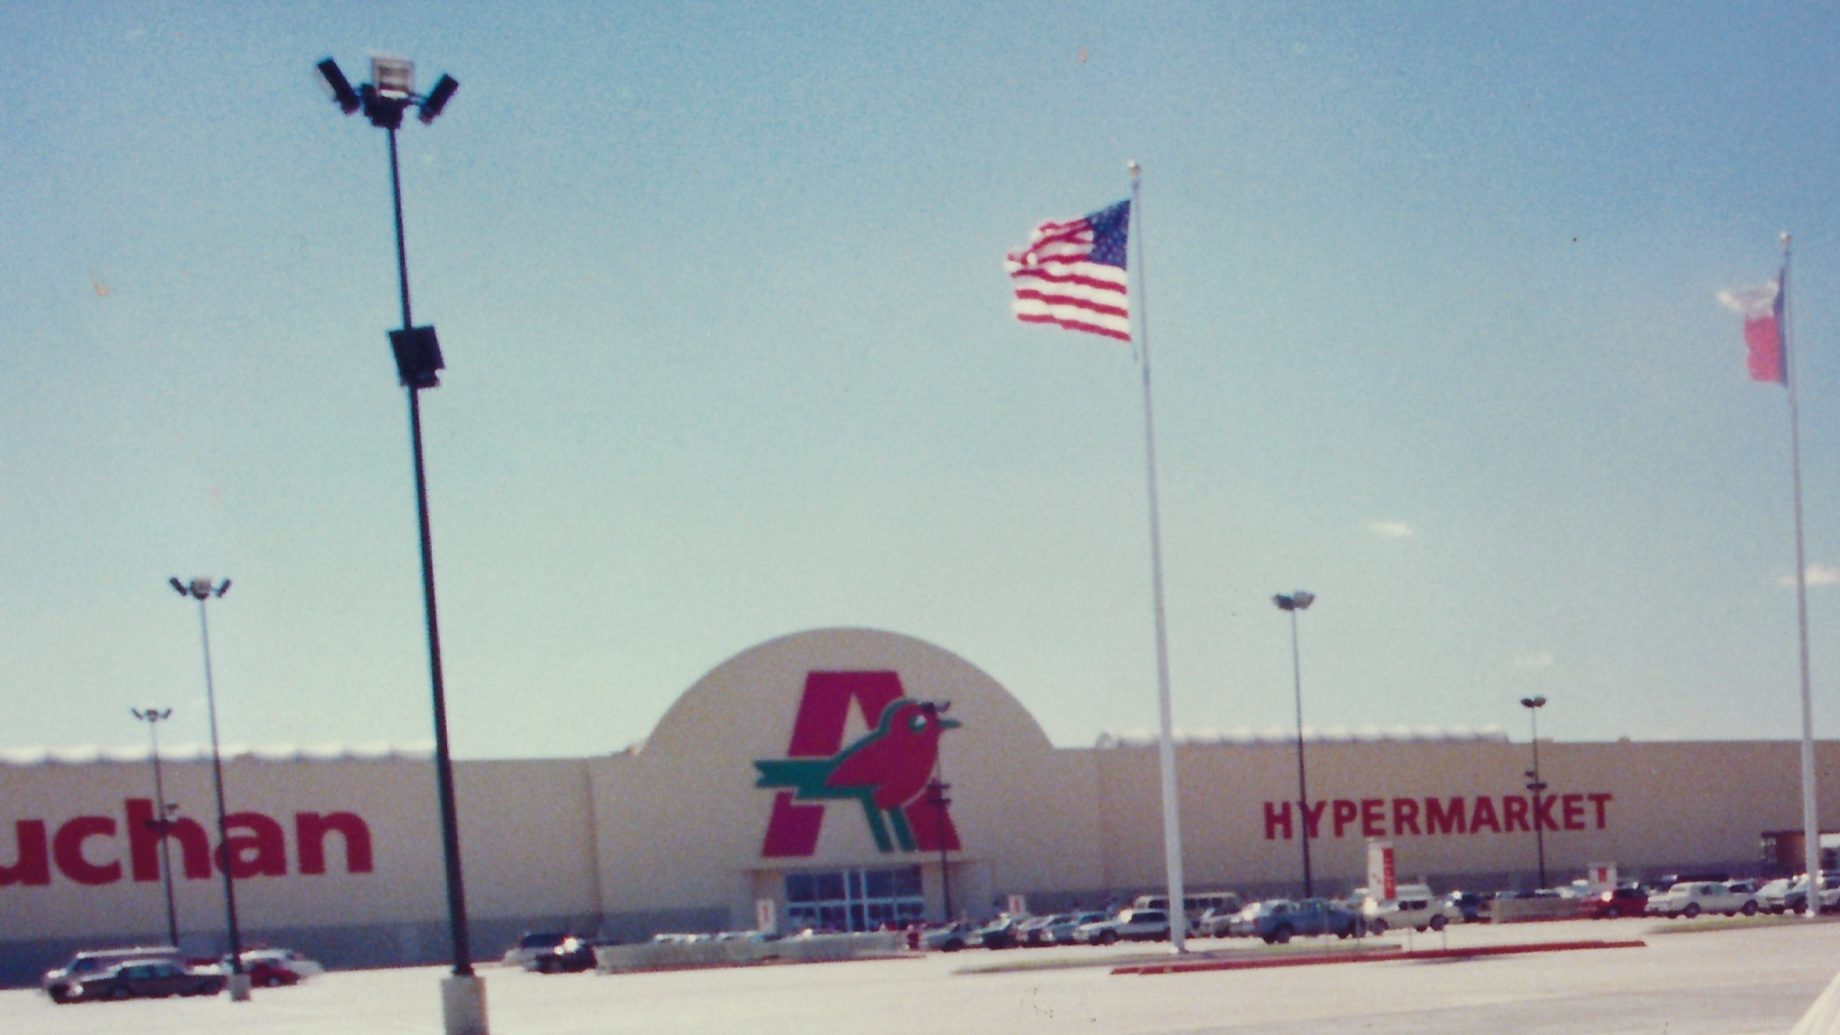 Retail Wrap: Tim Hortons starts expansion to Texas in Houston